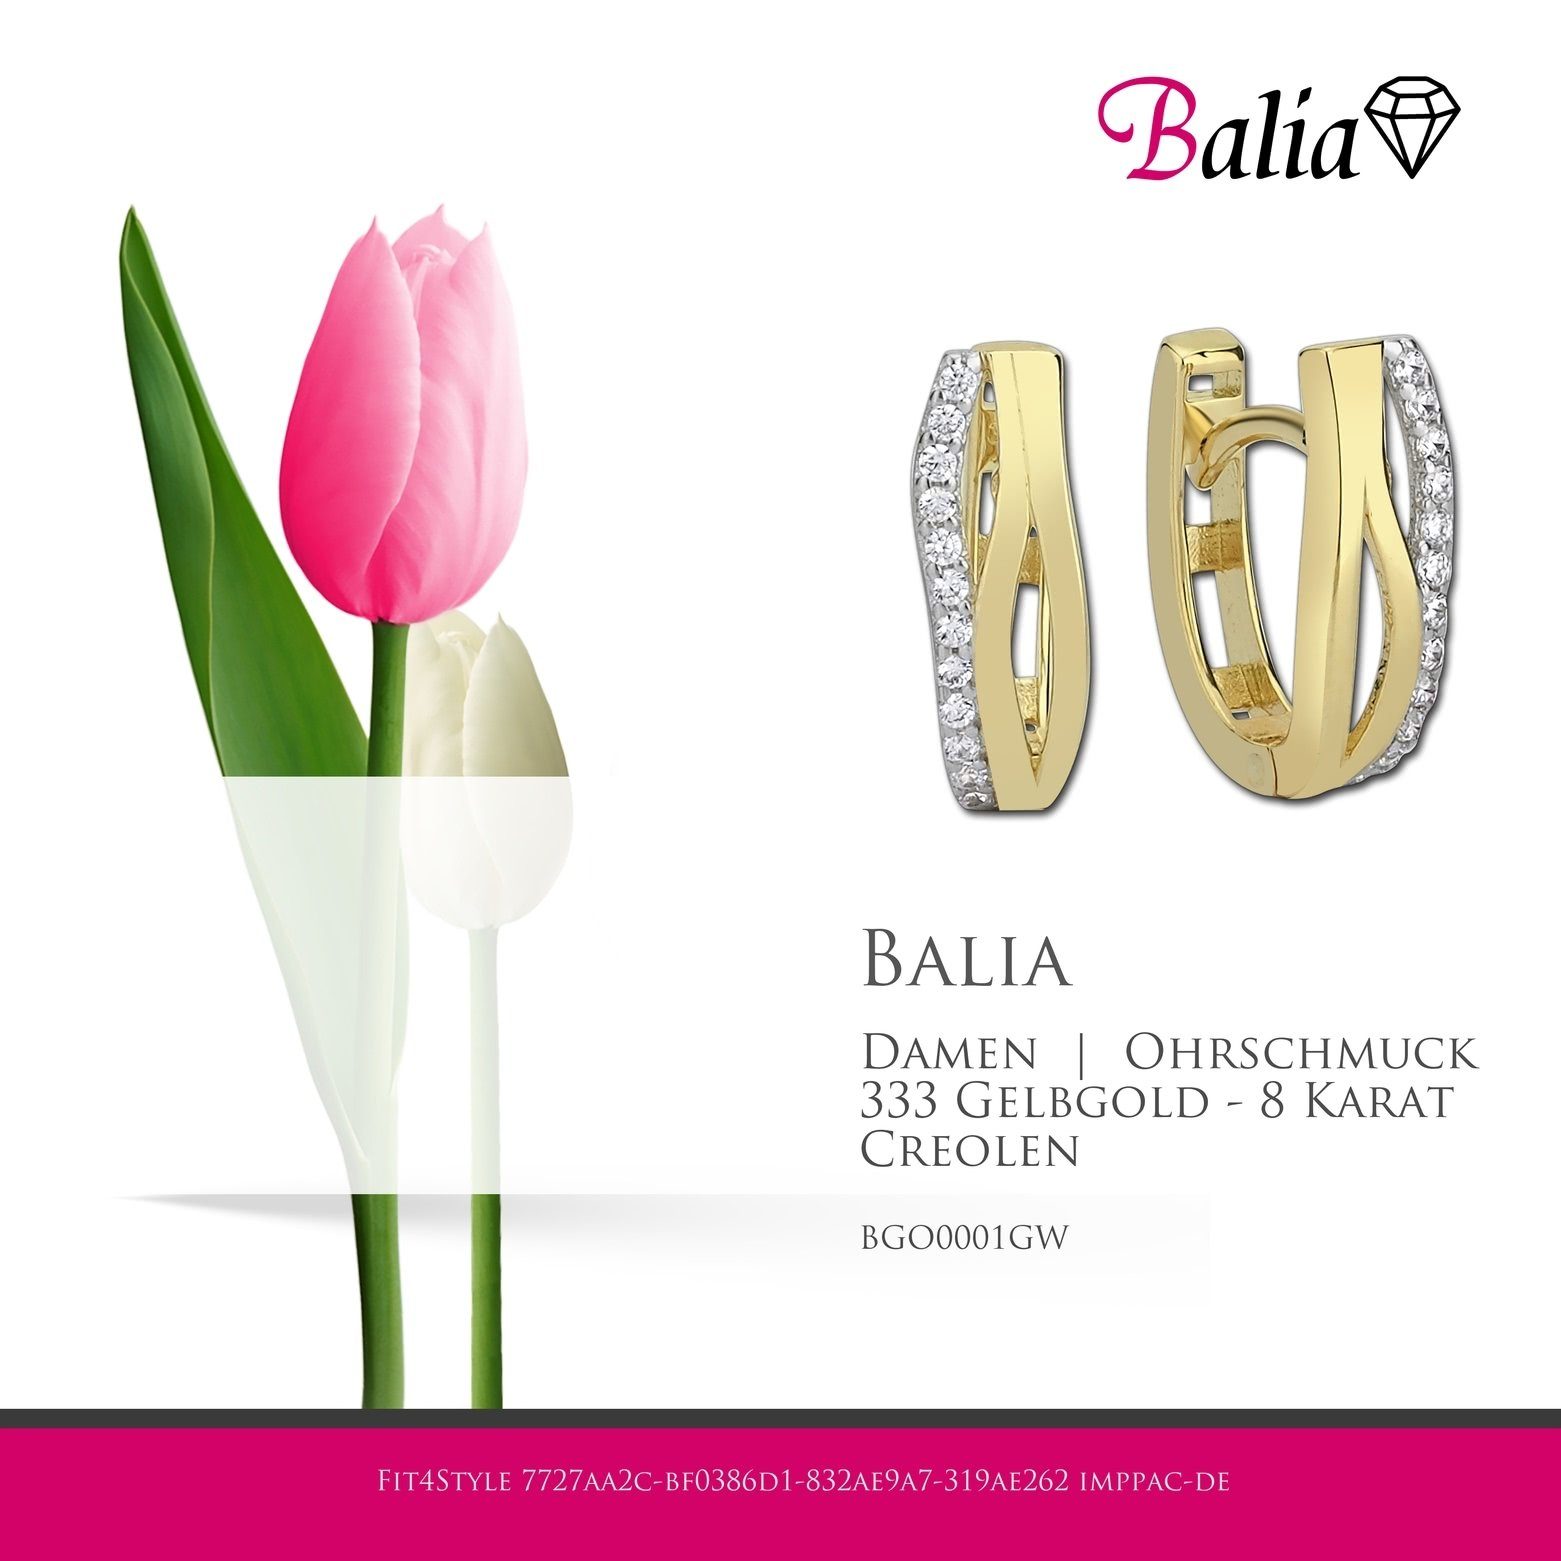 Balia Paar Creolen Farbe: Damen Gold gold (Creolen), 333 aus Creolen Wellen Gelbgold Karat, Balia für 8K 8 weiß, - Creolen Damen